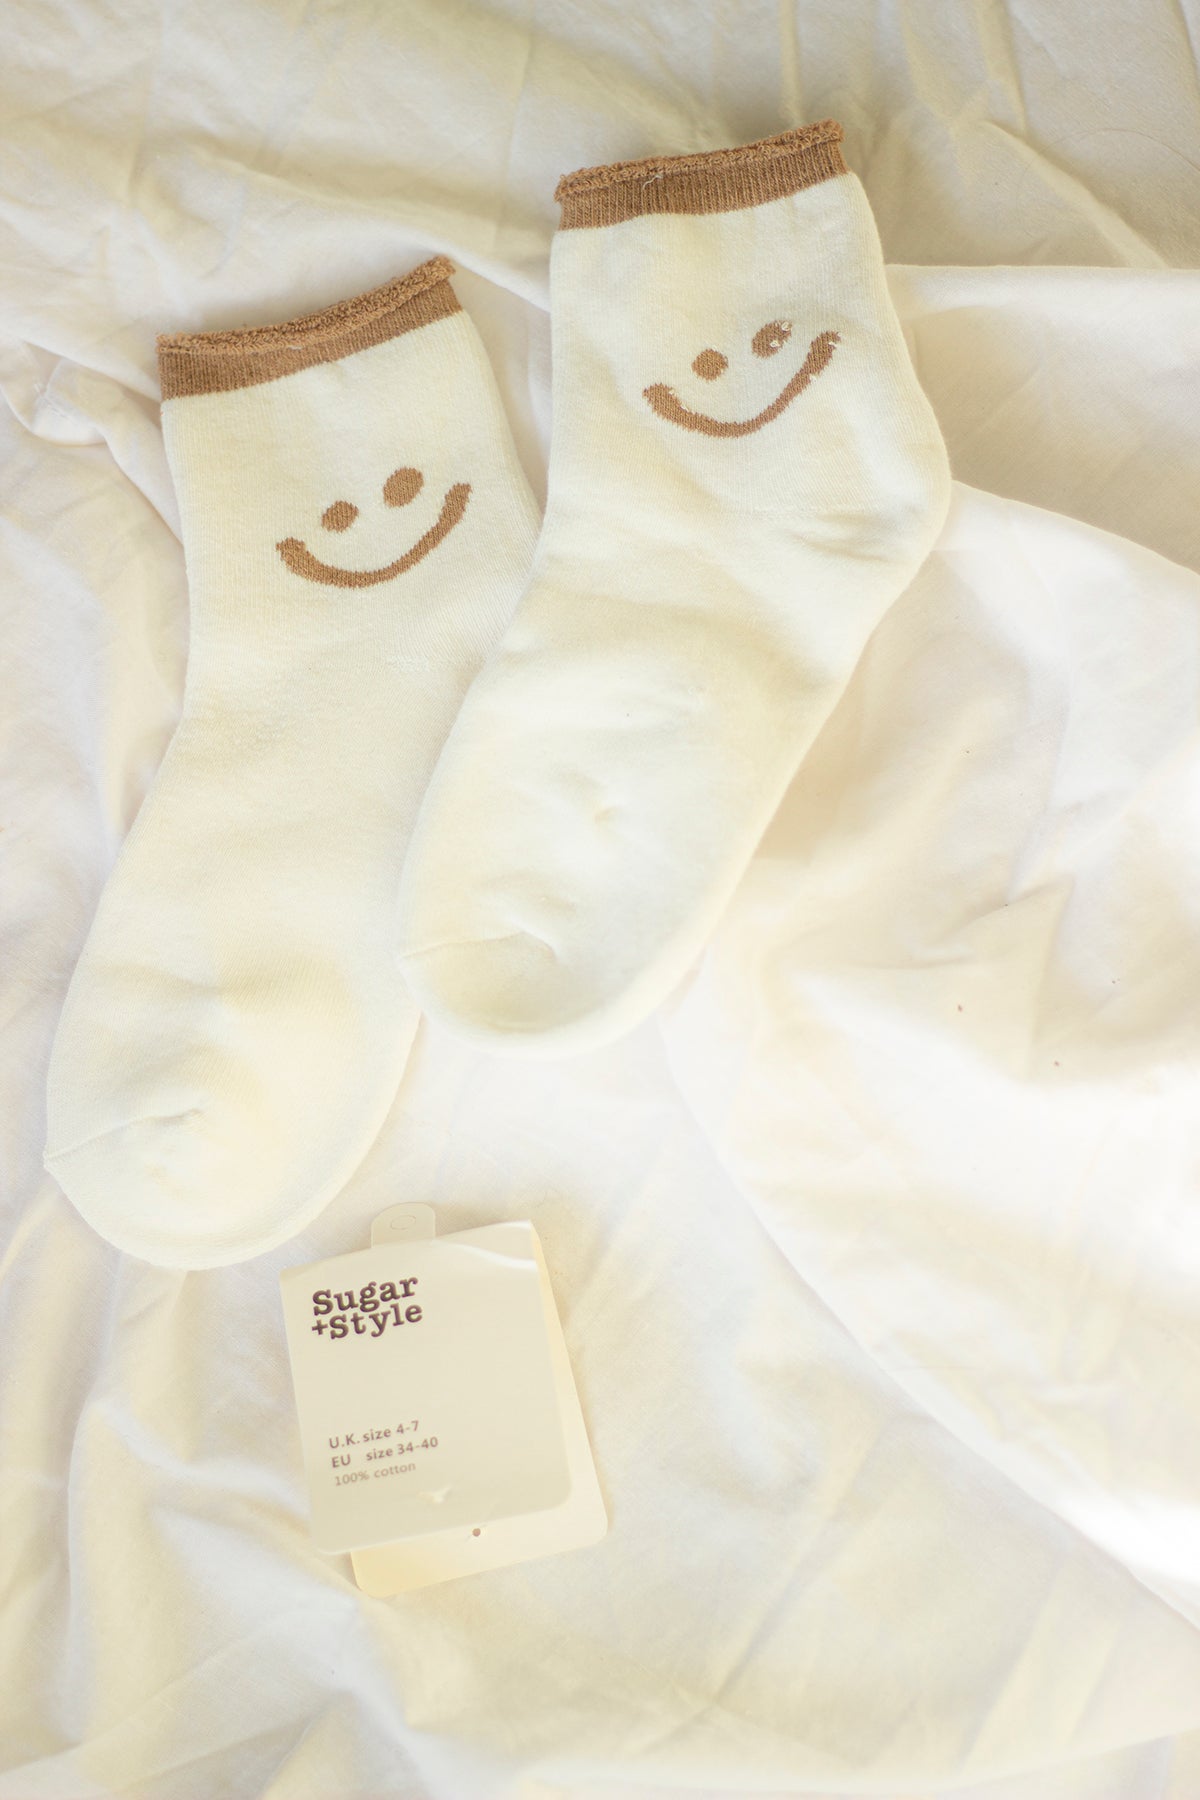 Super Smiley Neutral Socks - Sugar + Style